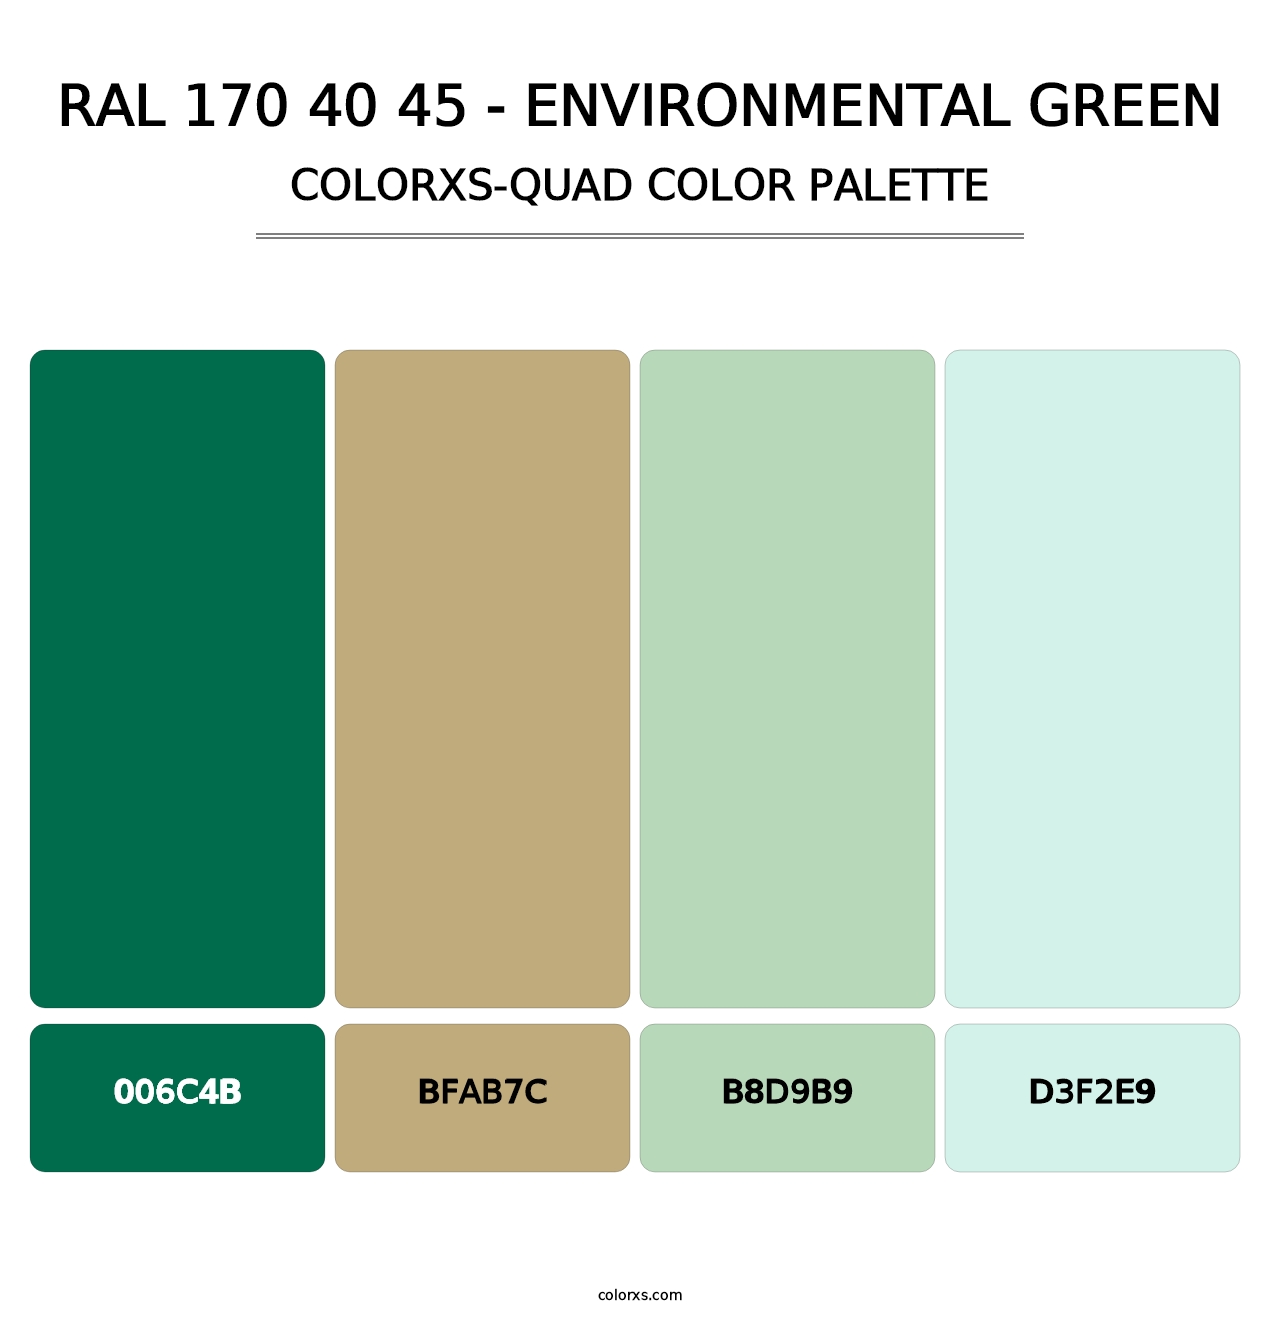 RAL 170 40 45 - Environmental Green - Colorxs Quad Palette